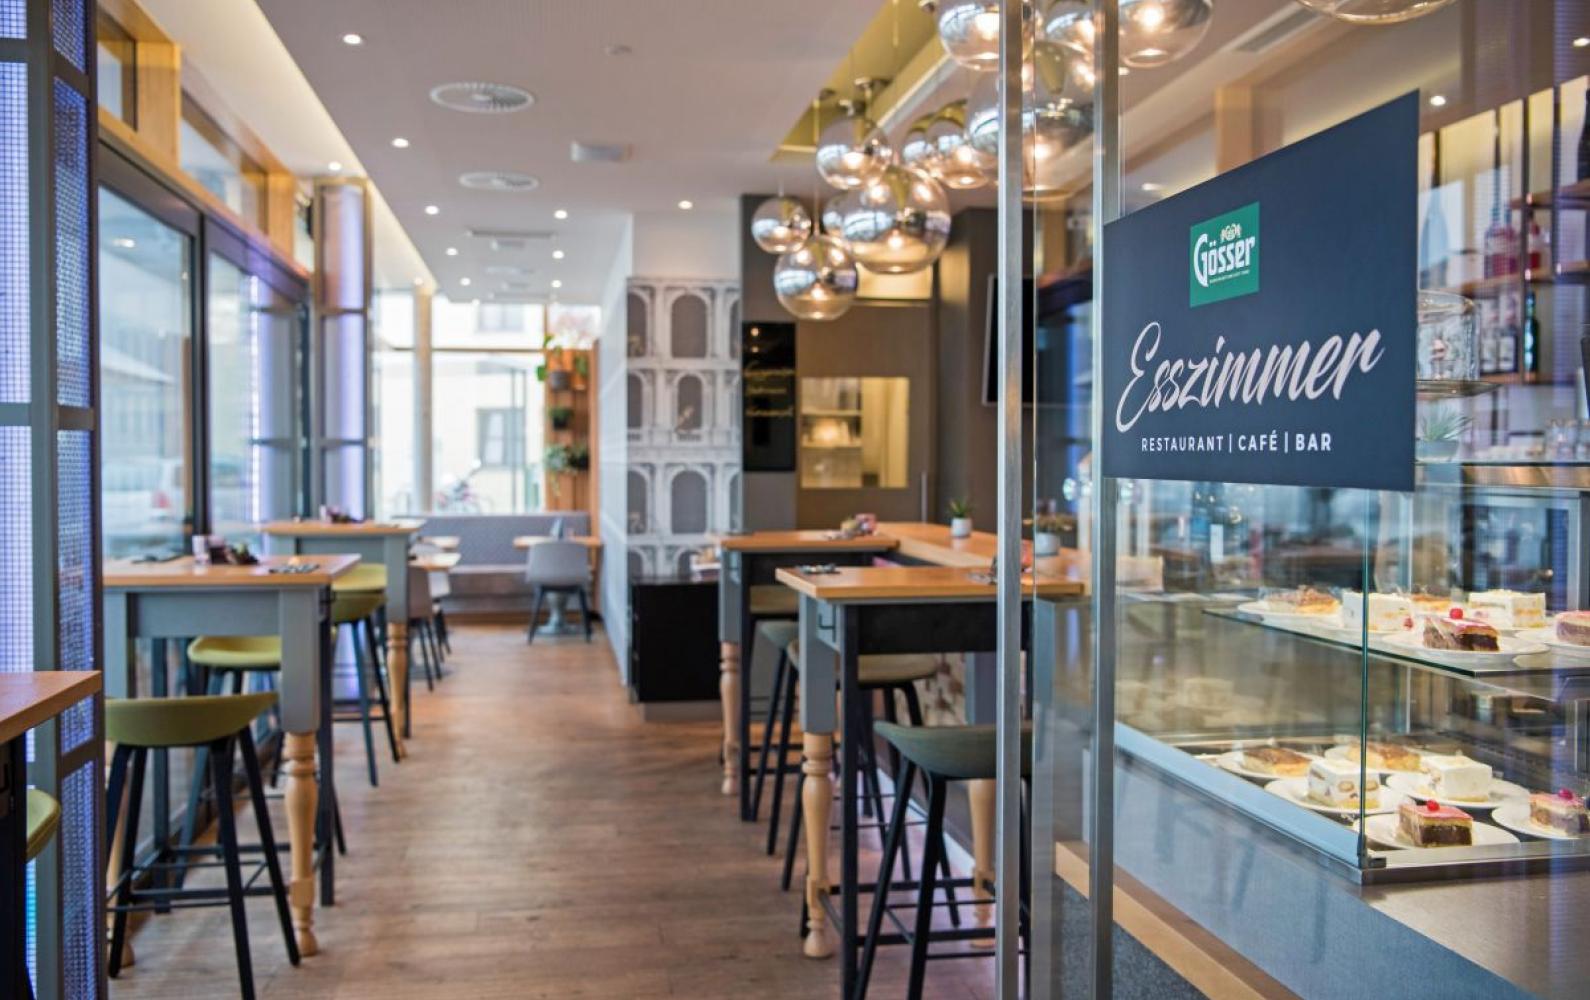 Esszimmer | Restaurant - Bar - Café Headerbild